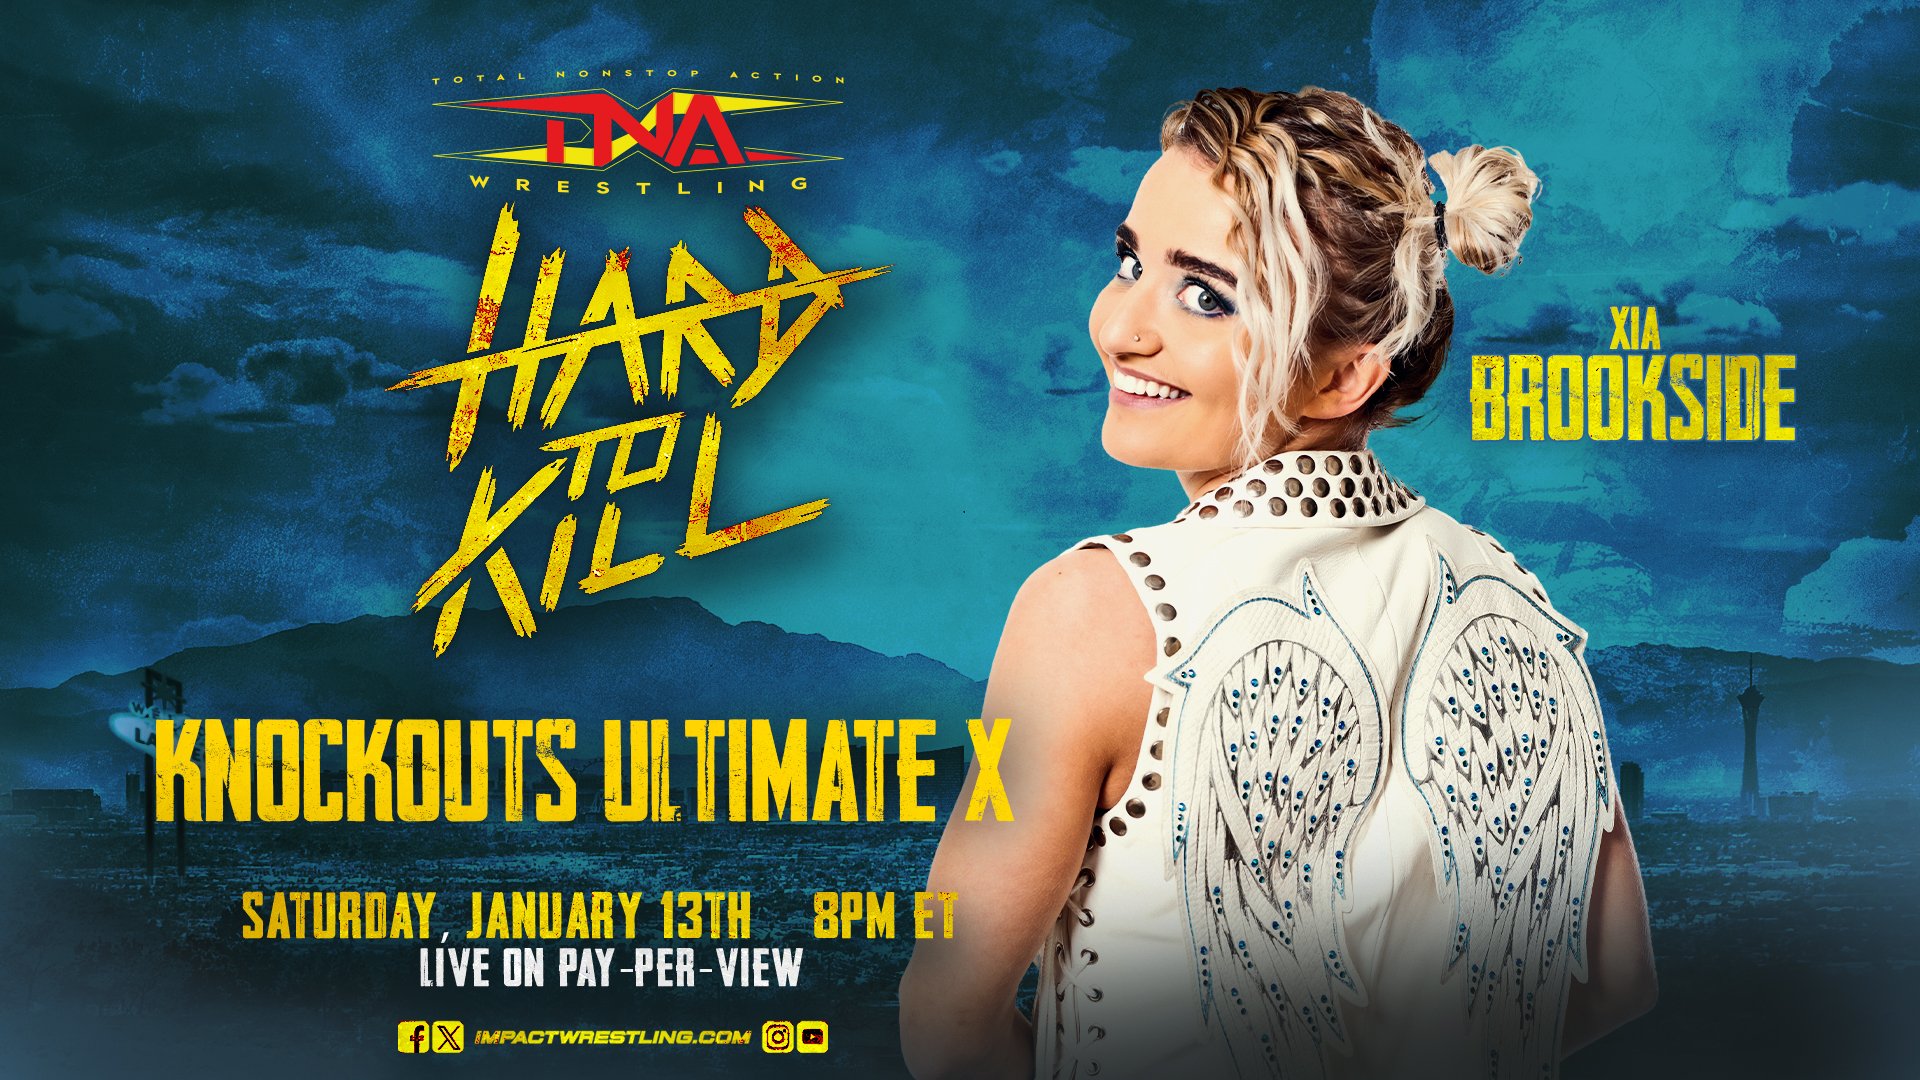 Xia Brookside to Make TNA Debut ad Hard to Kill